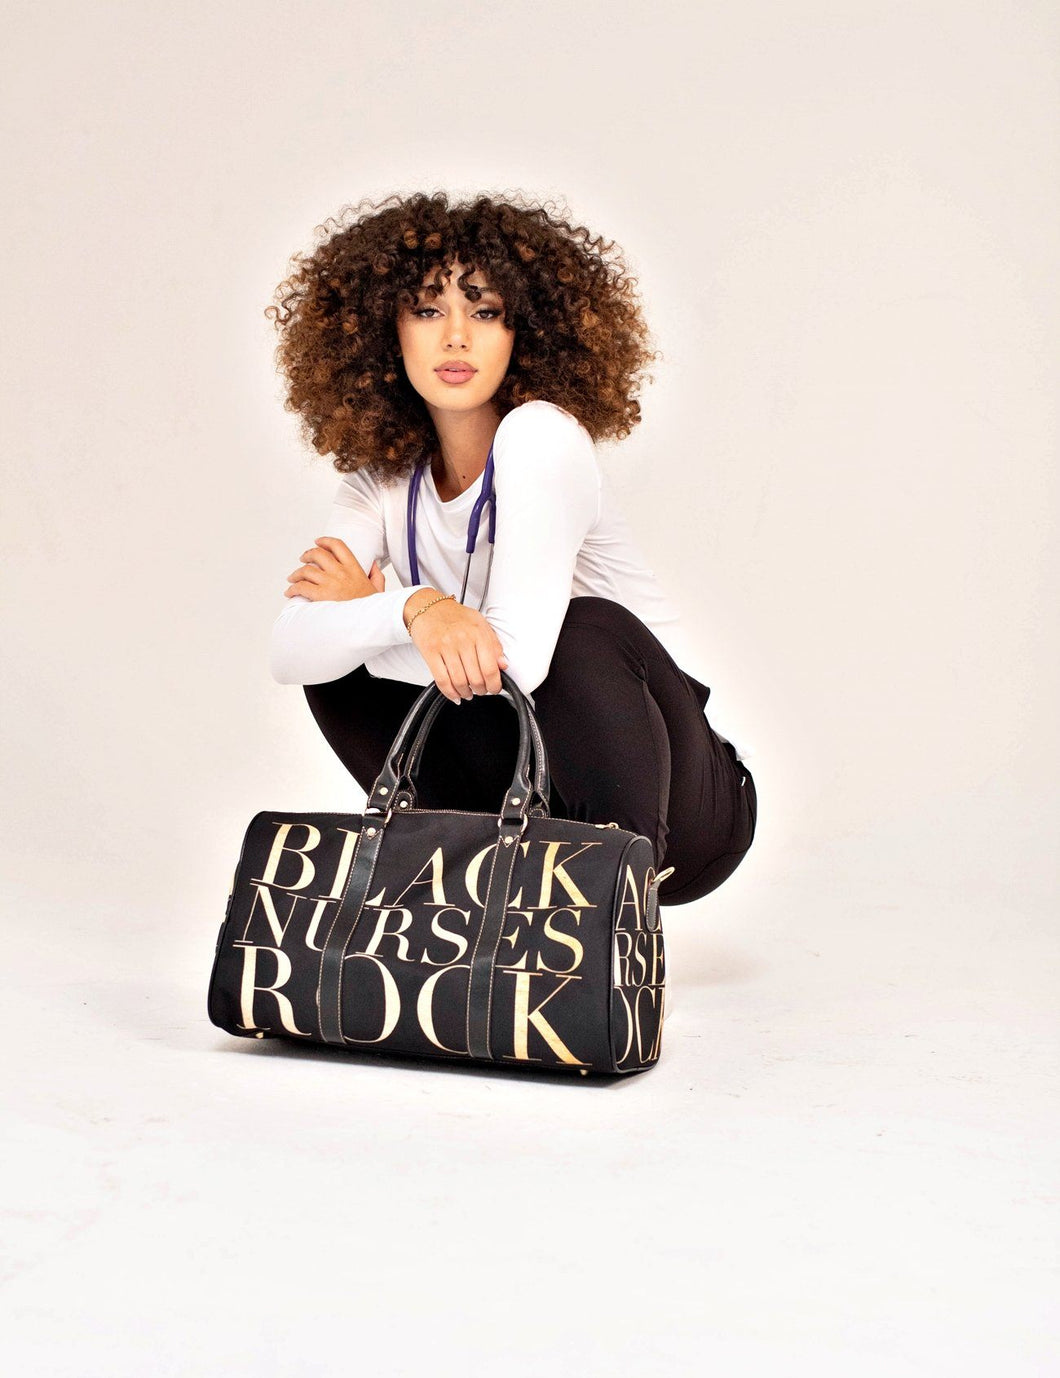 BNR Black Nurses Rock! Duffel Bag Add Your Name